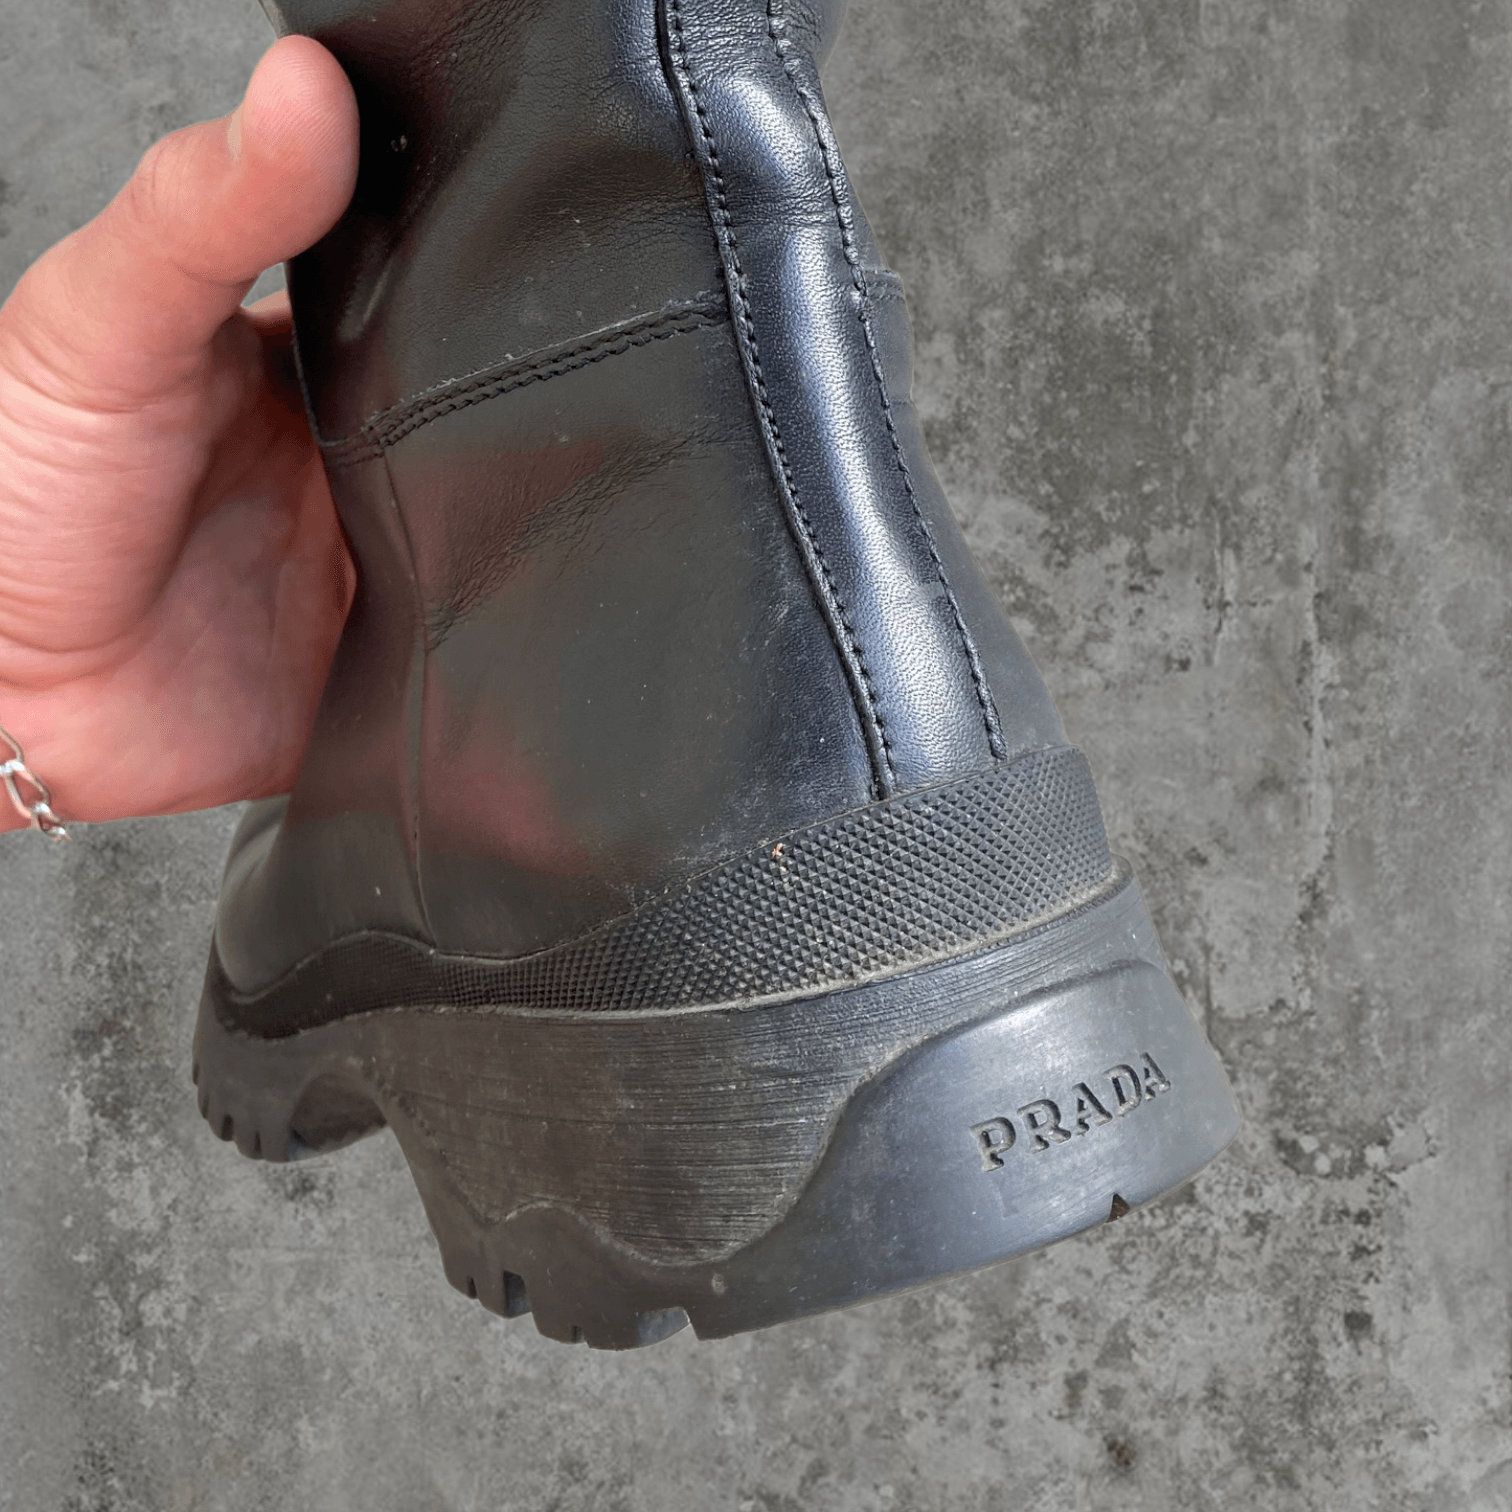 PRADA FW03 COMBAT LUG-SOLE BIKER BOOTS - UK 6 - Known Source